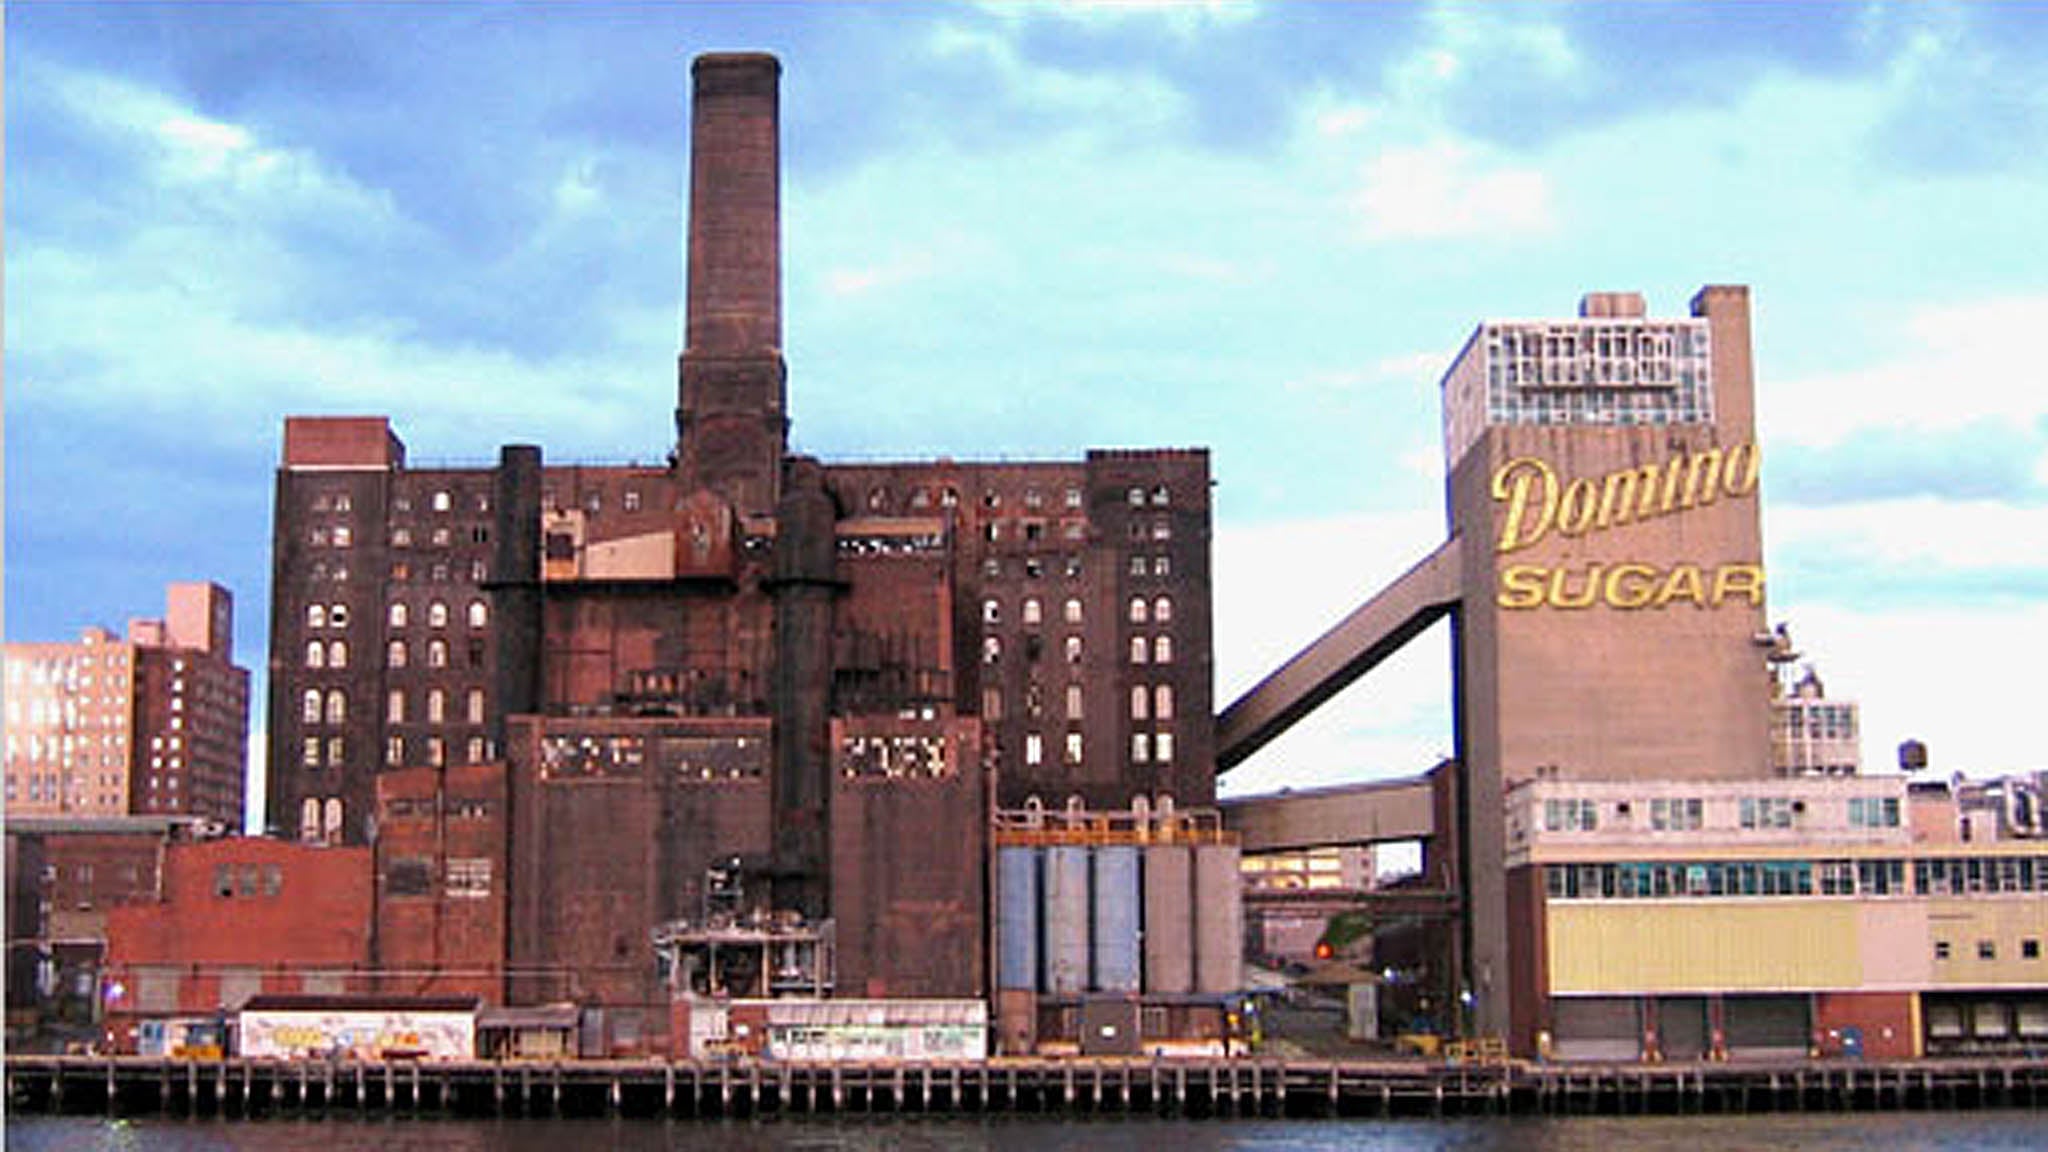 Domino Sugar refinery in Williamsburg, Brooklyn.